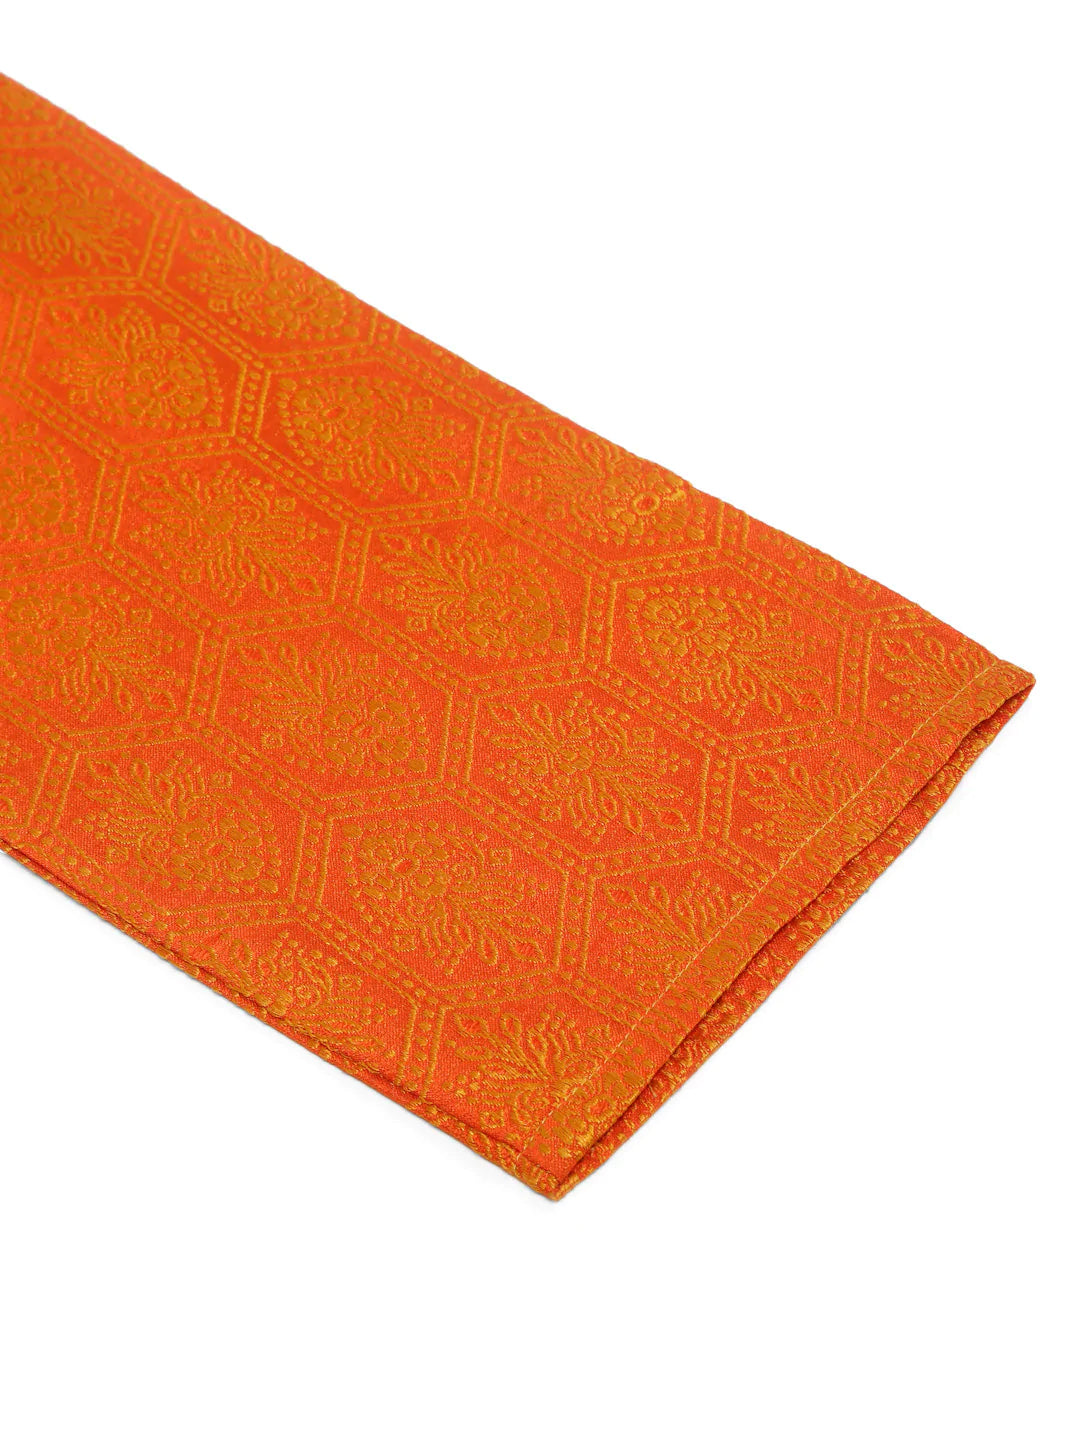 Jompers Men's Orange and Golden Woven Design Kurta Only ( KO 674 Orange )